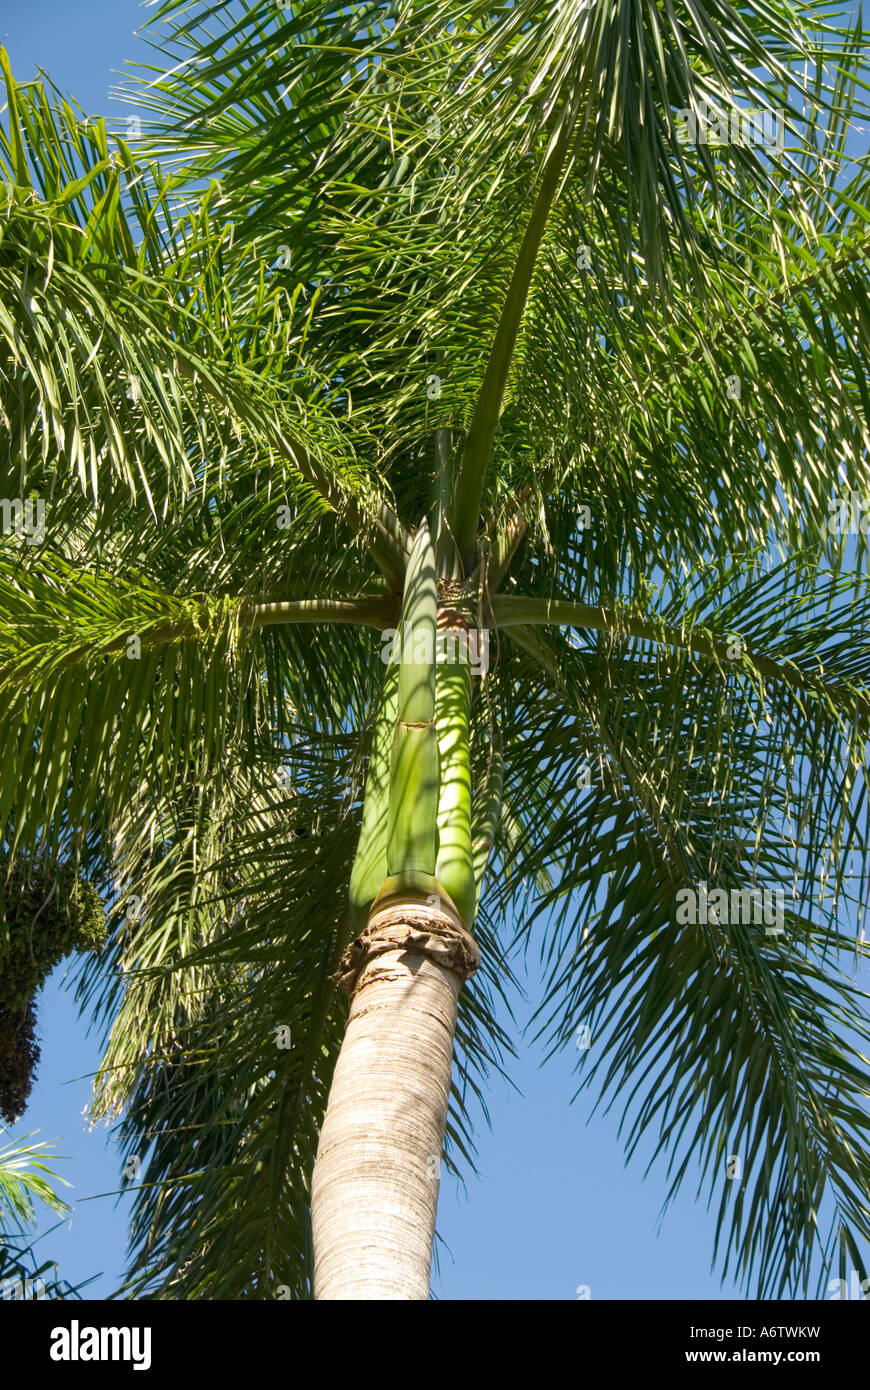 Royal palm tree portrait of fronds Stock Photo